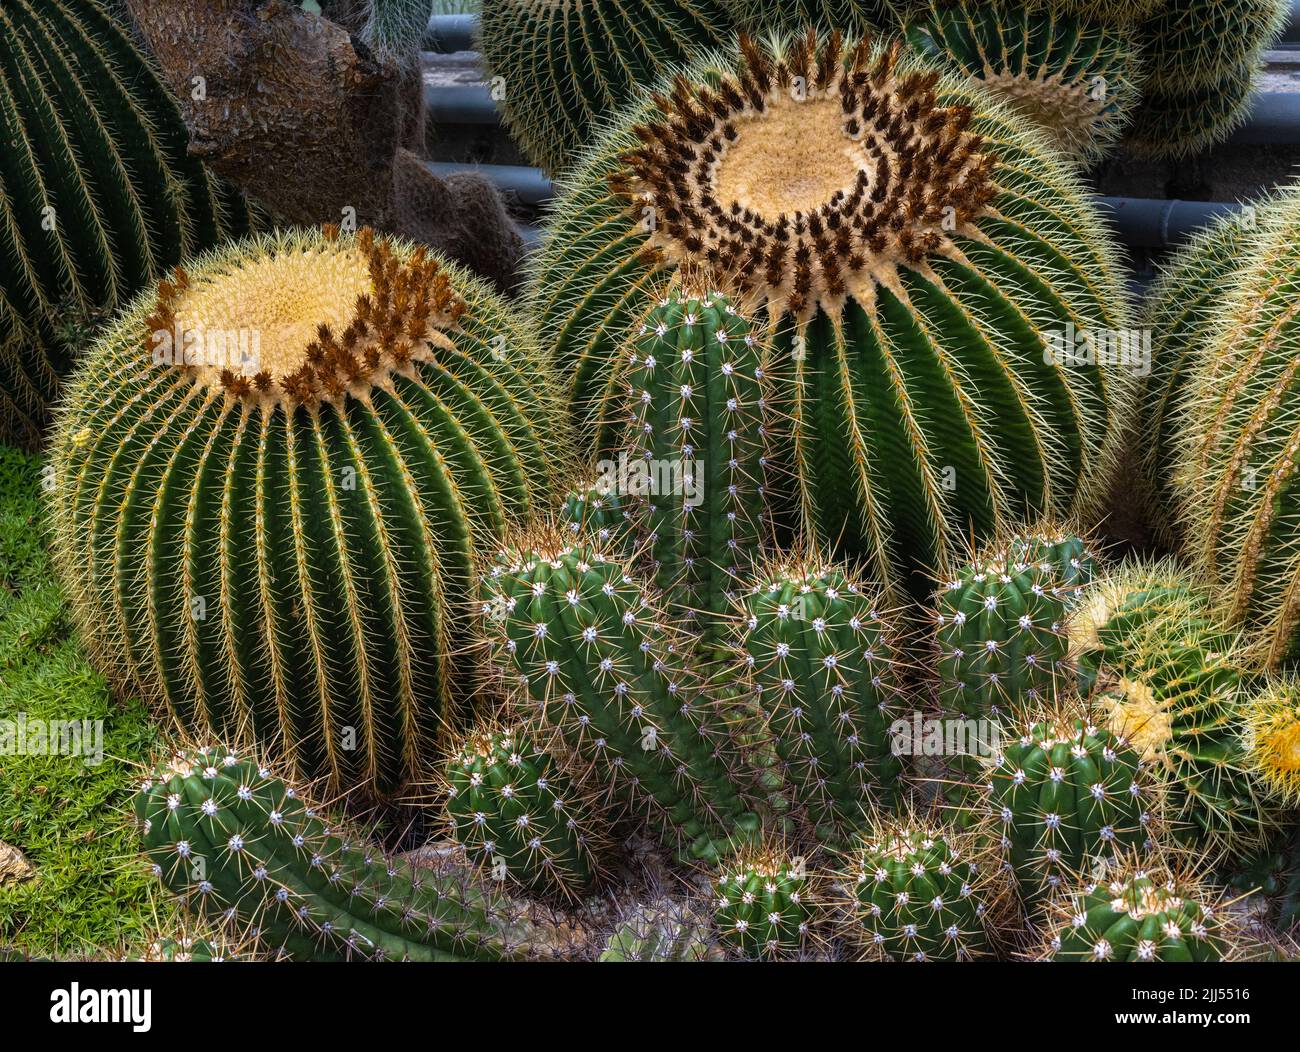 Golden barrel cactus (Echinocactus grusonii). Habitat Mexico. The barrel cactus stores water in its spherical ribbed axes. Stock Photo